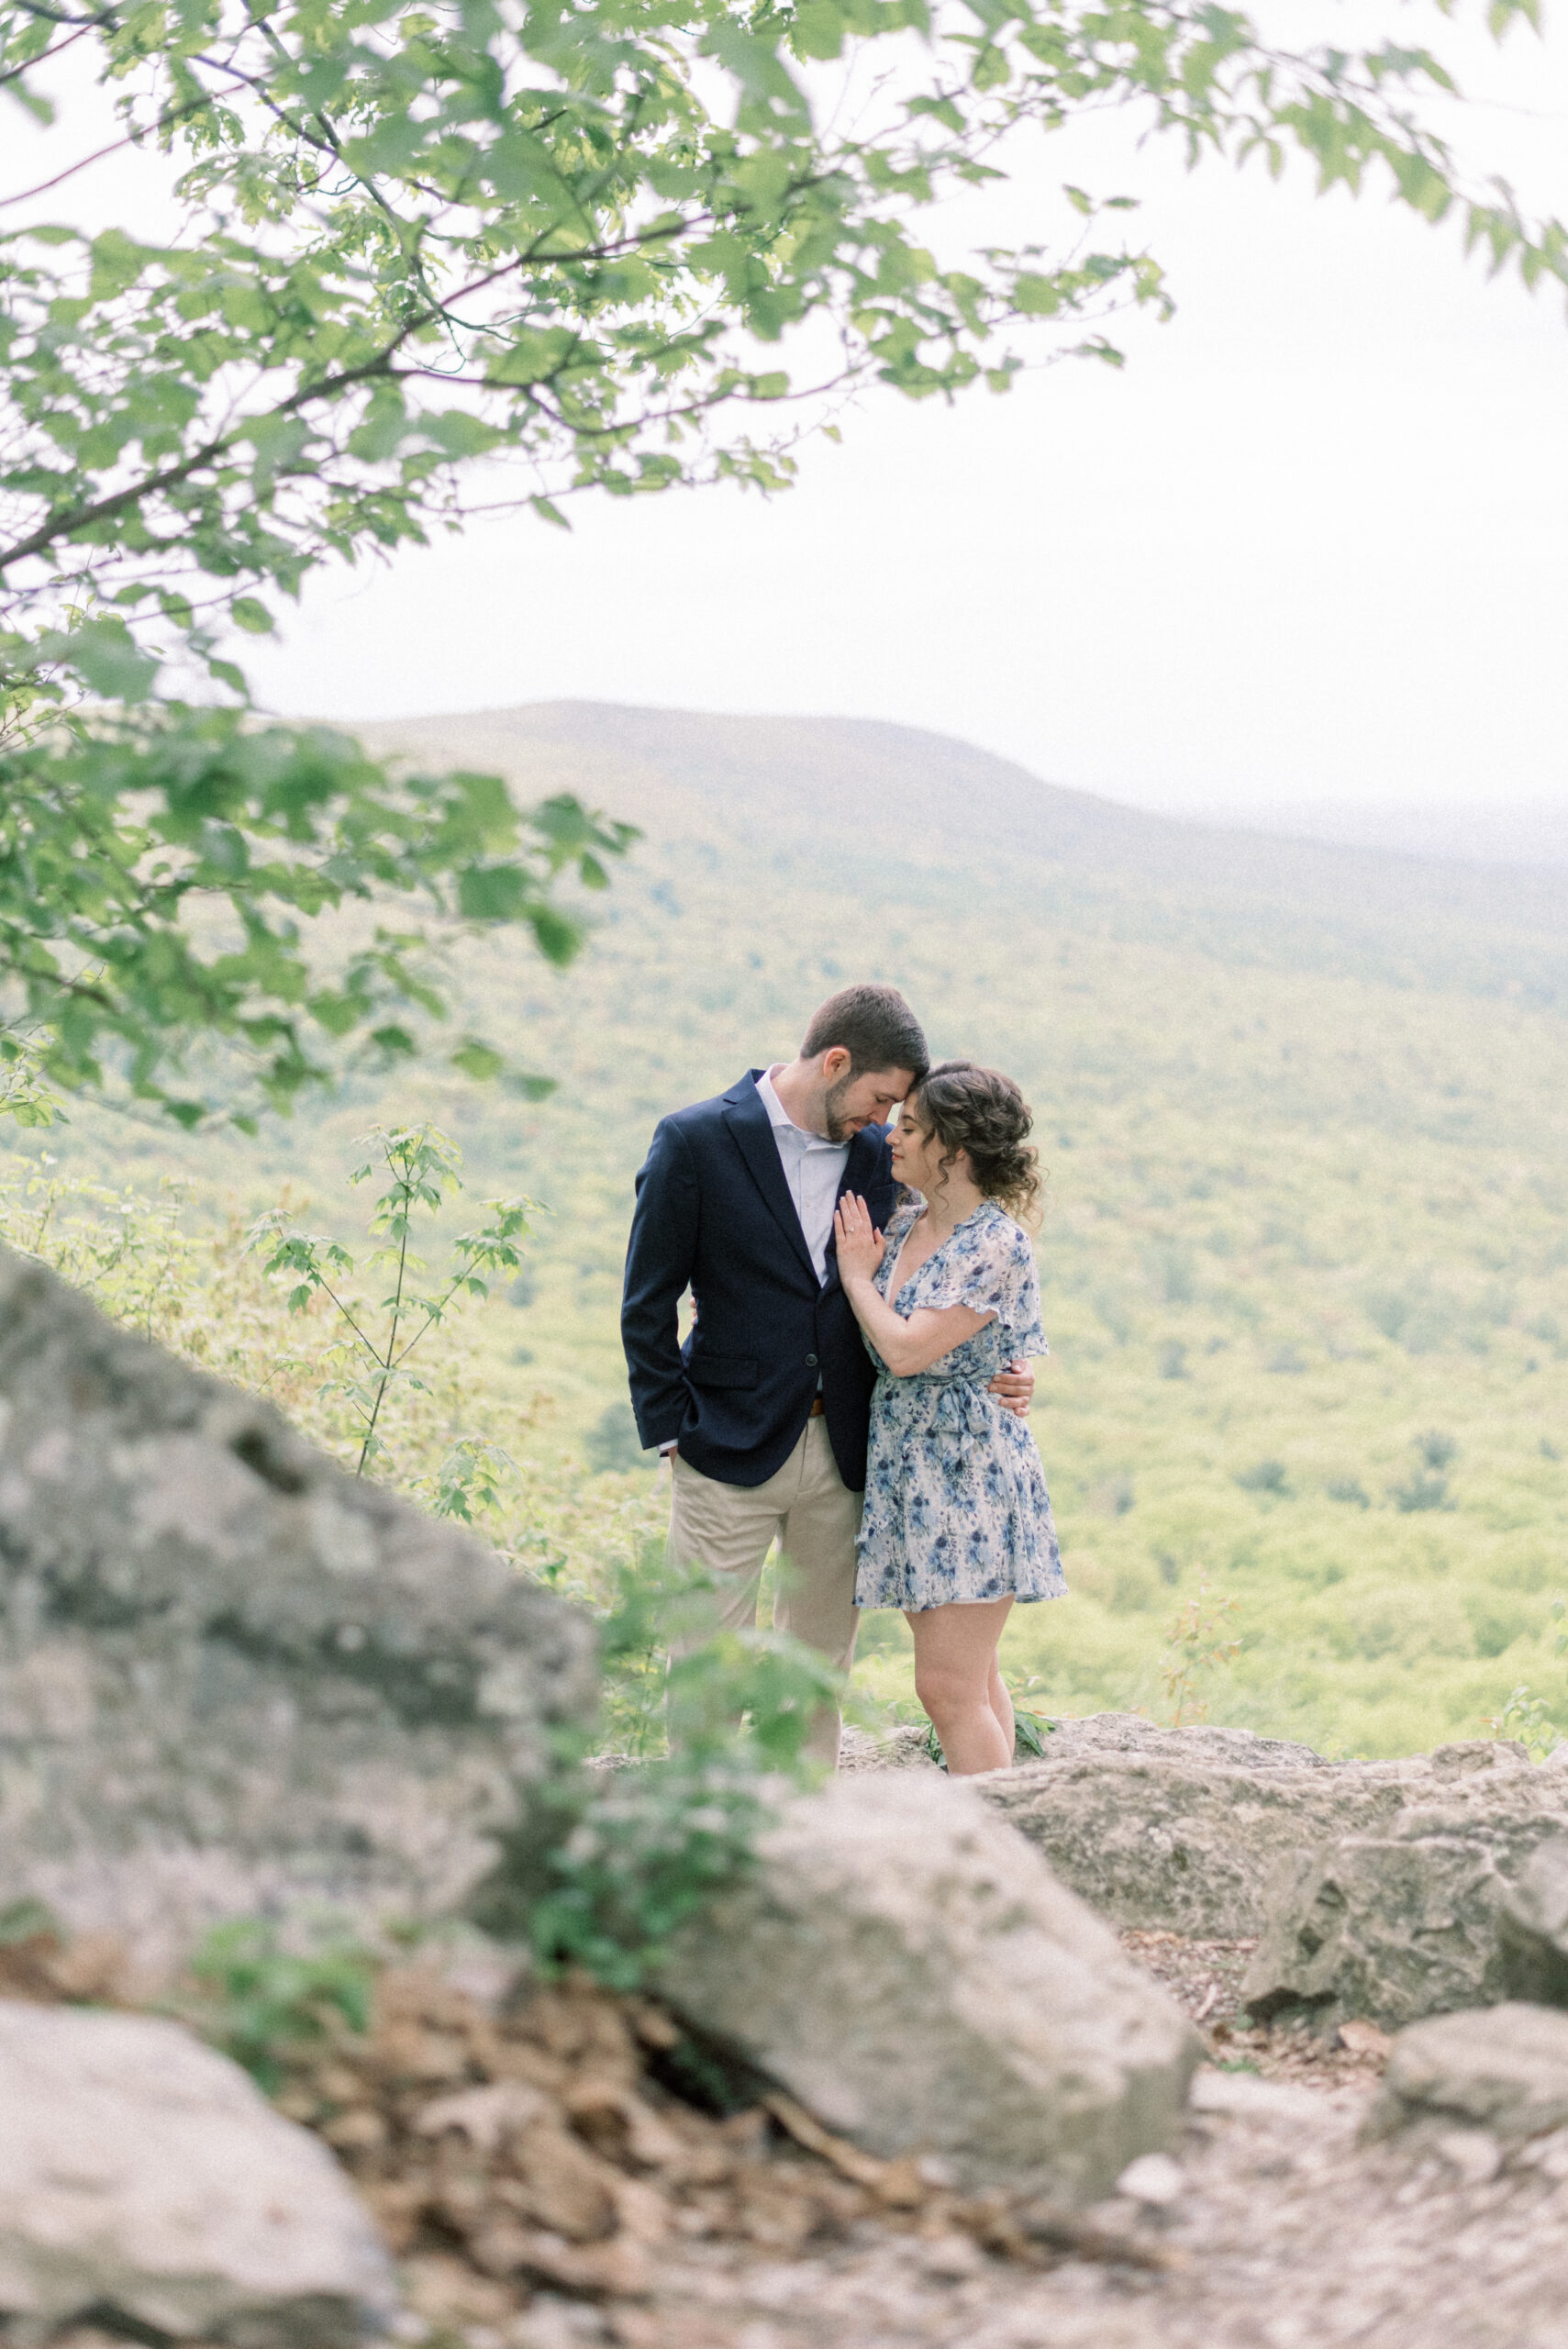 Maryland wedding photographer captures couple hugging during engagement portraits